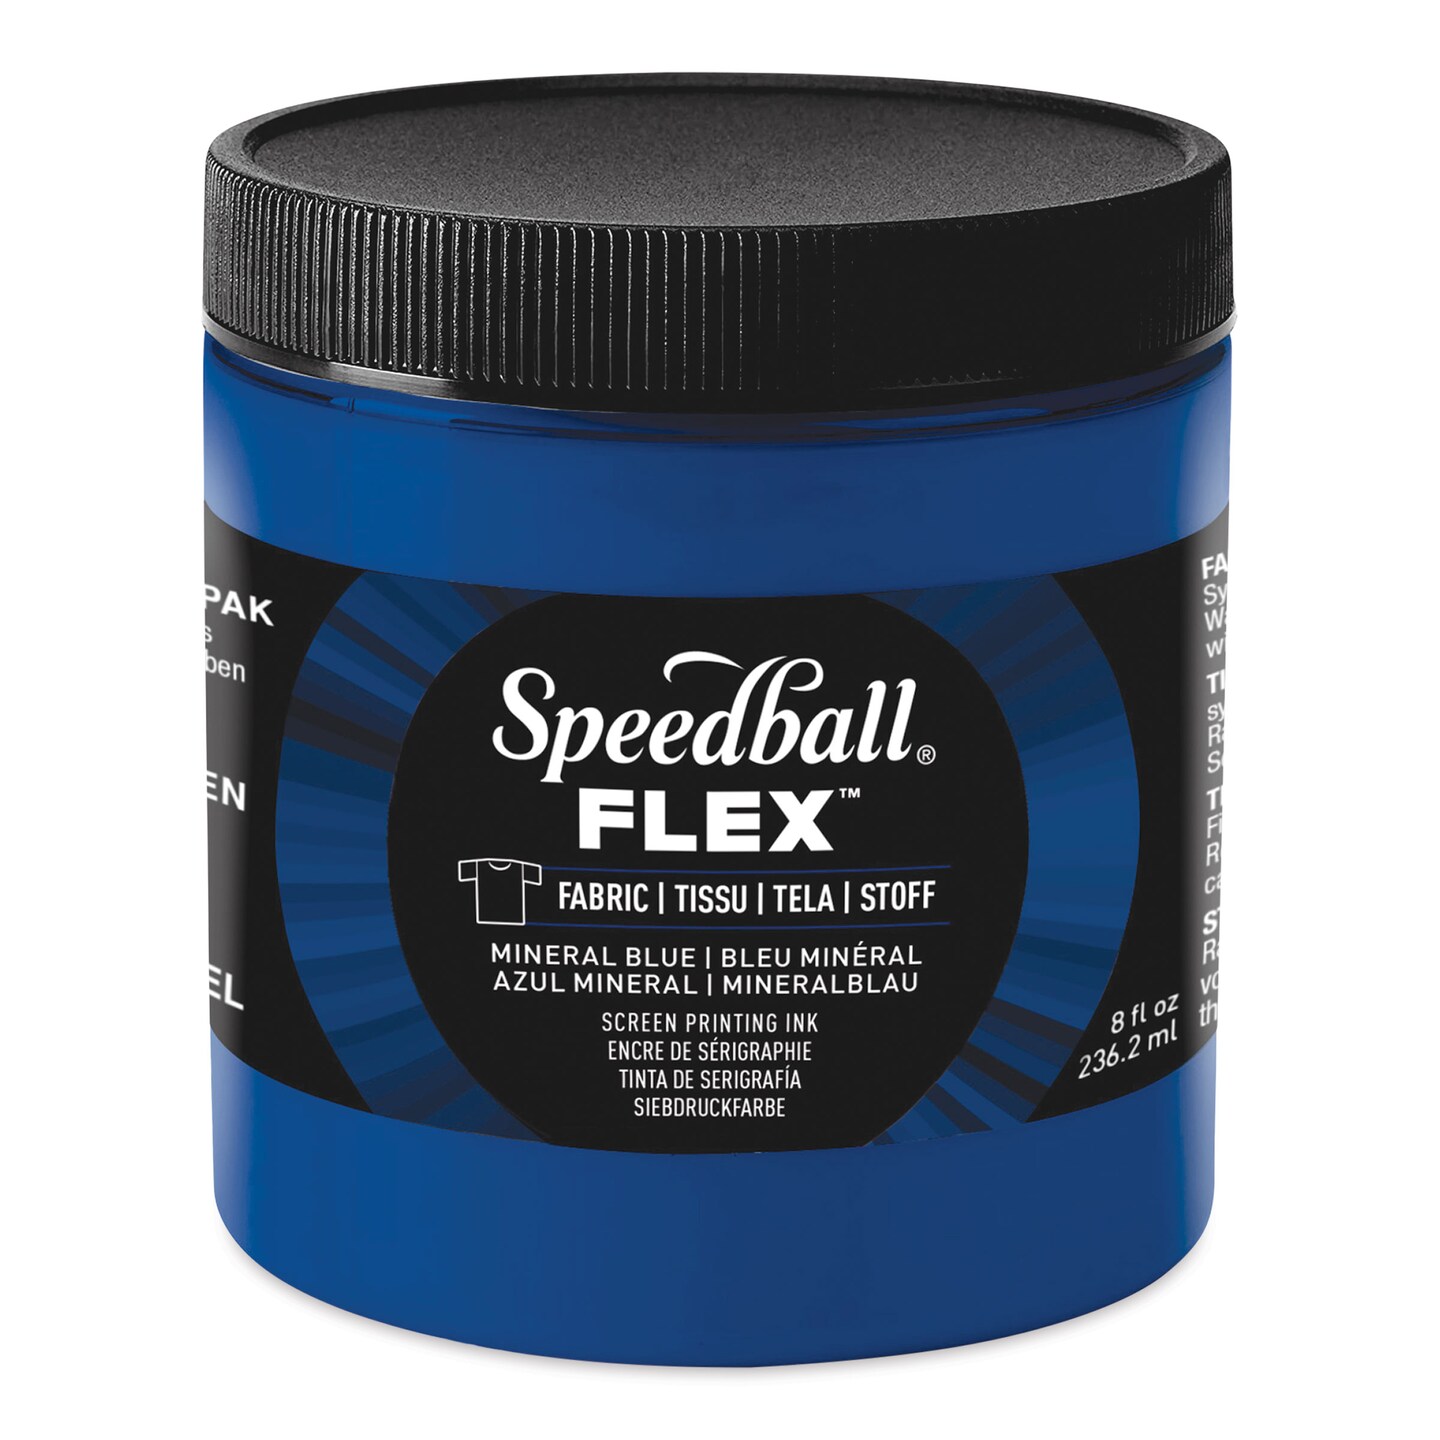 Speedball Flex Screen Printing Fabric Ink - Mineral Blue, 8 oz